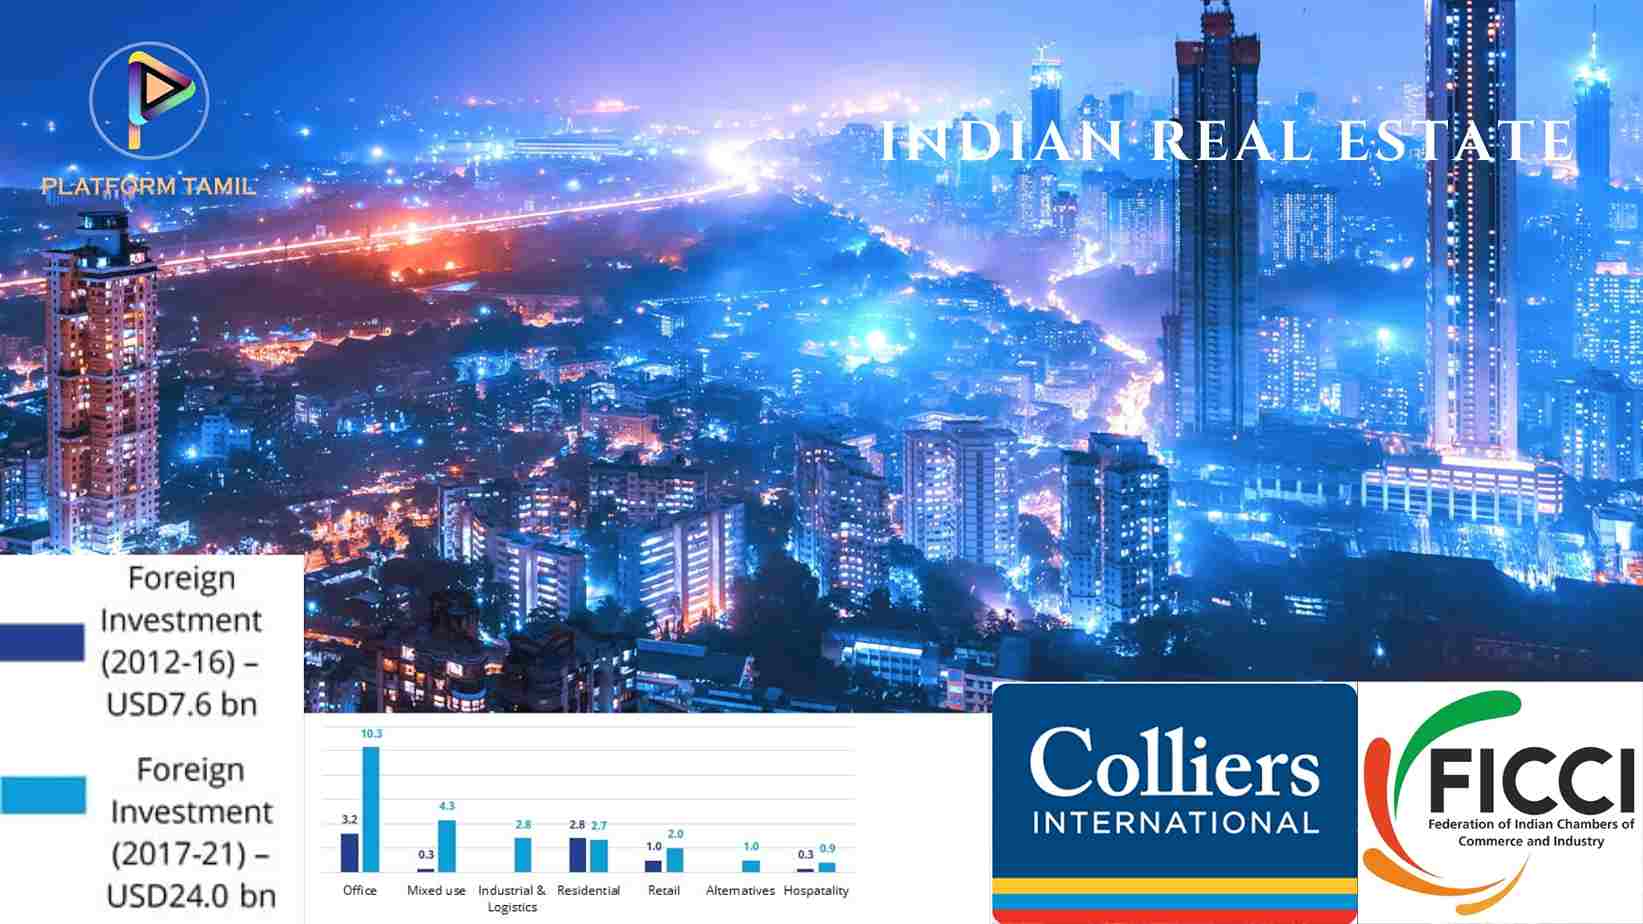 Colliers-FICCI Report - Platform Tamil